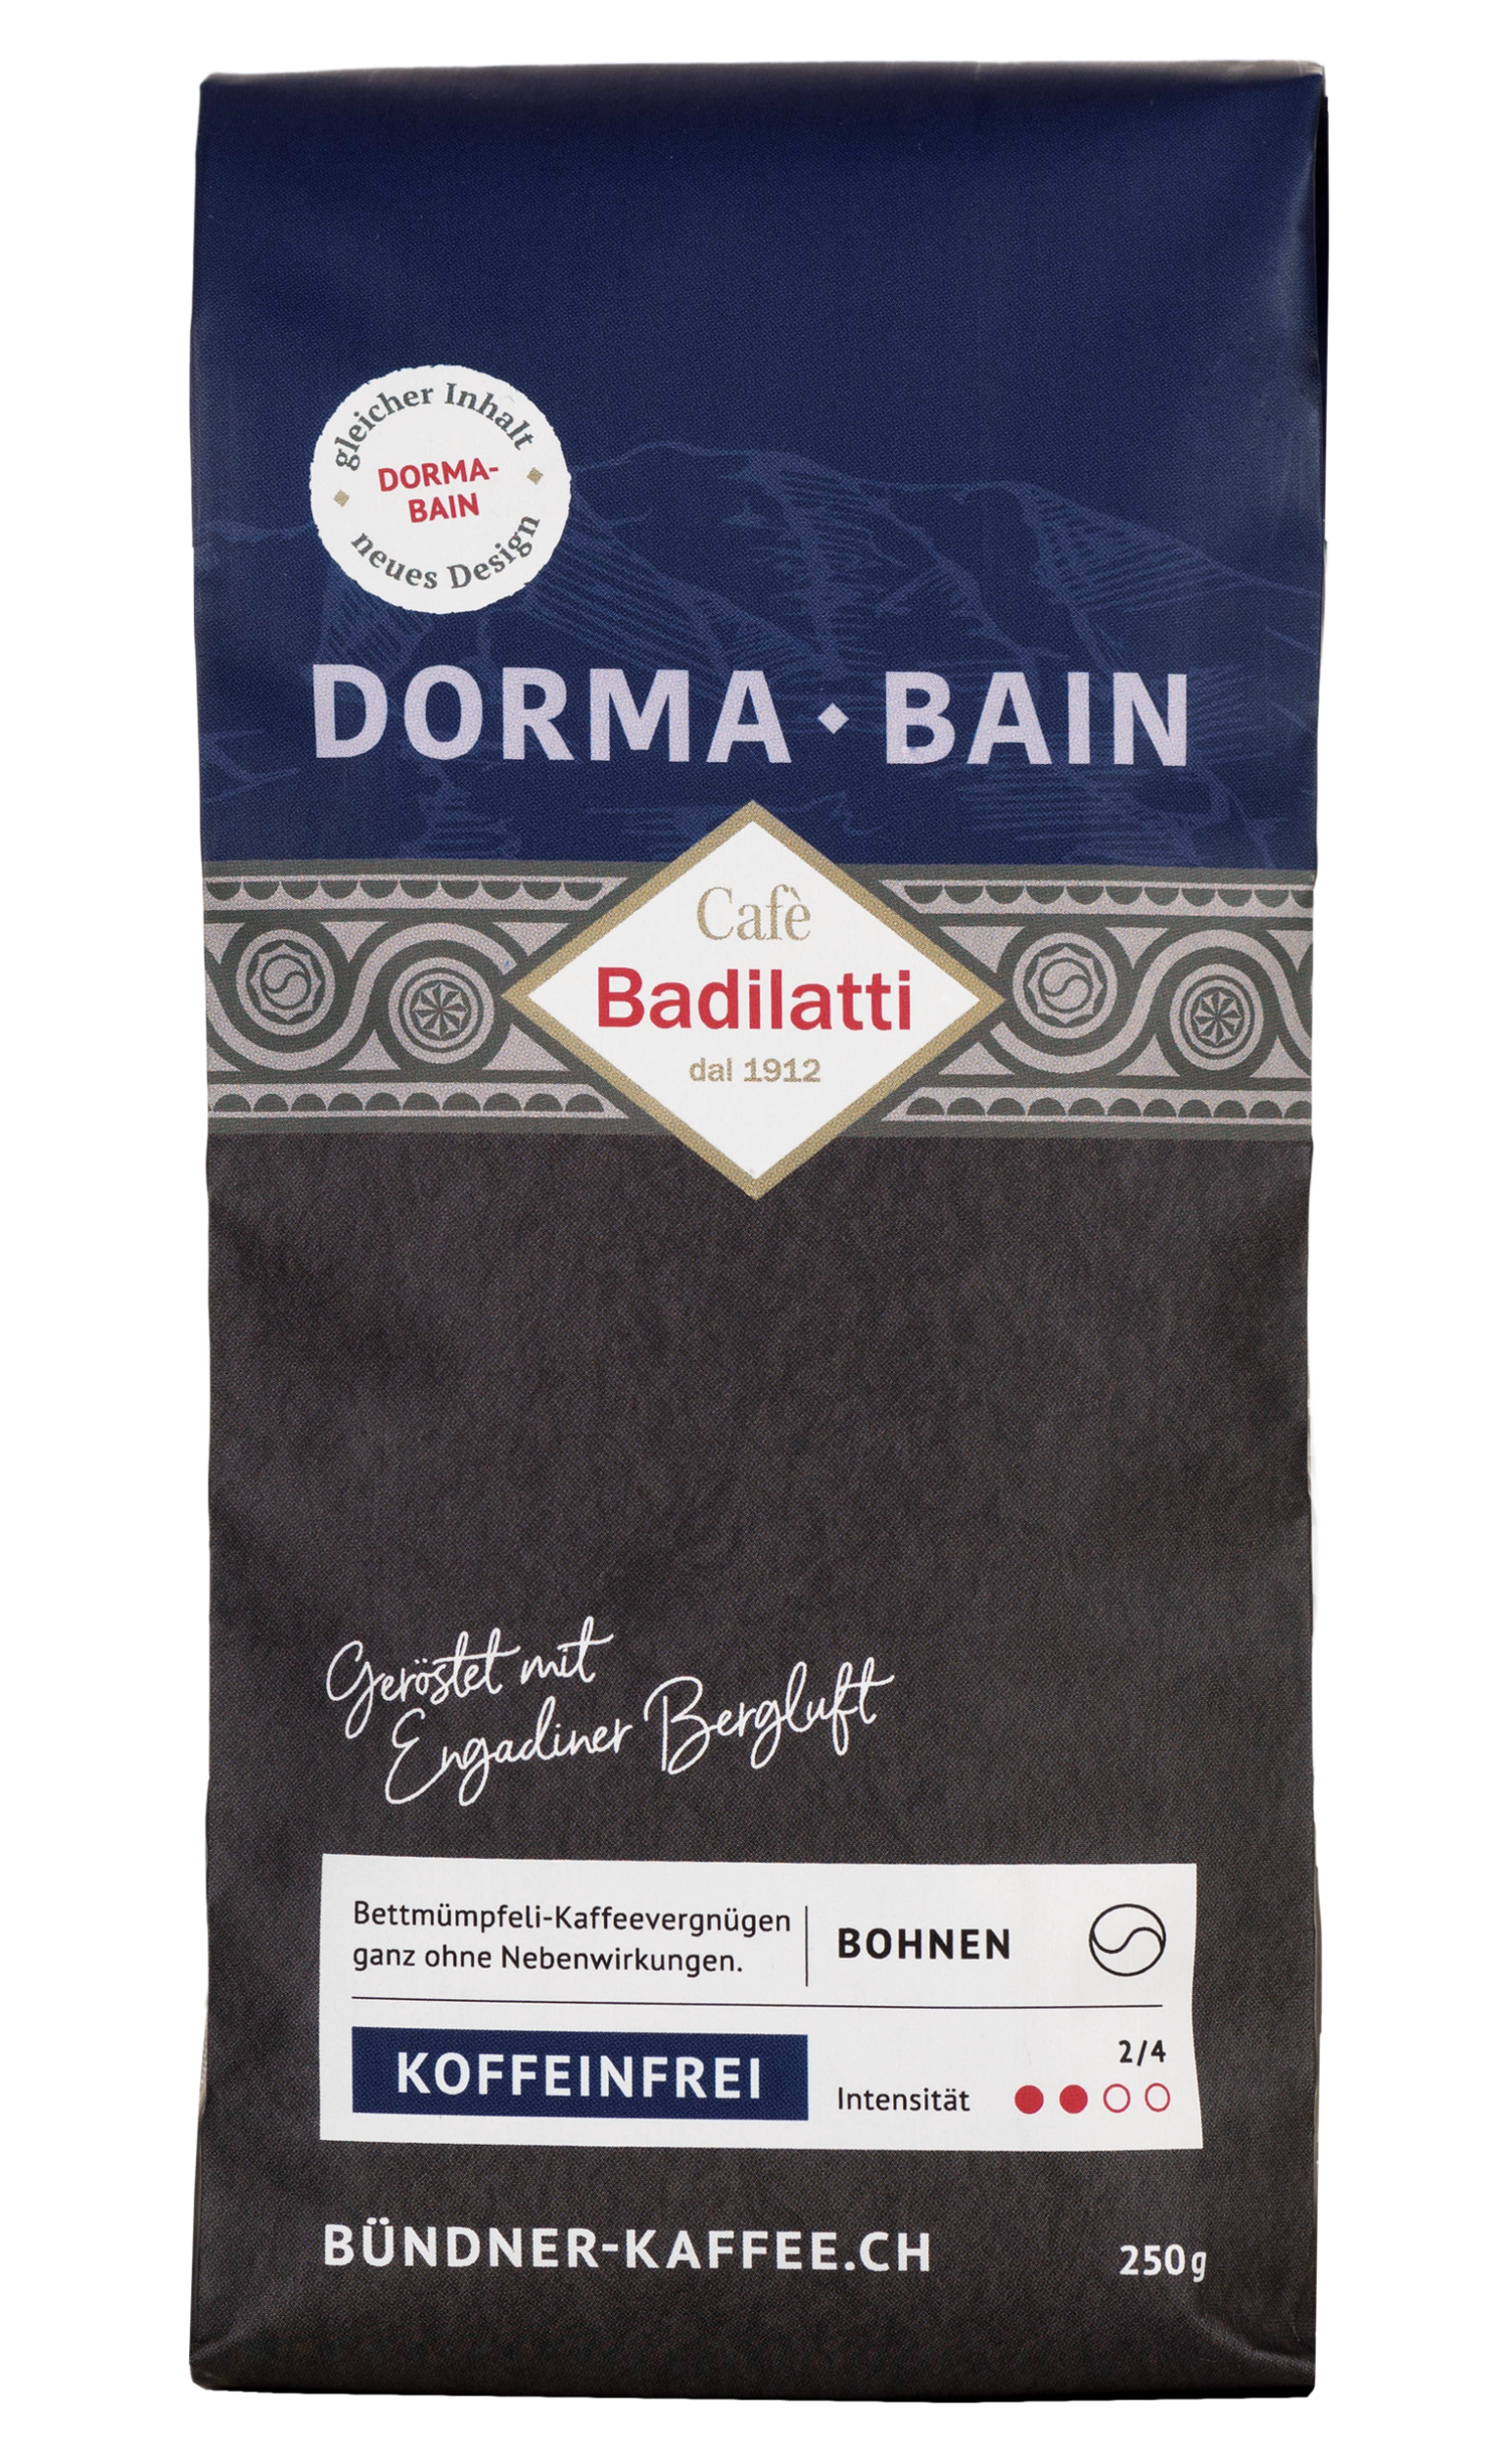 250g koffeinfreie Dorma Bain Kaffeebohnen von Cafè Badilatti.